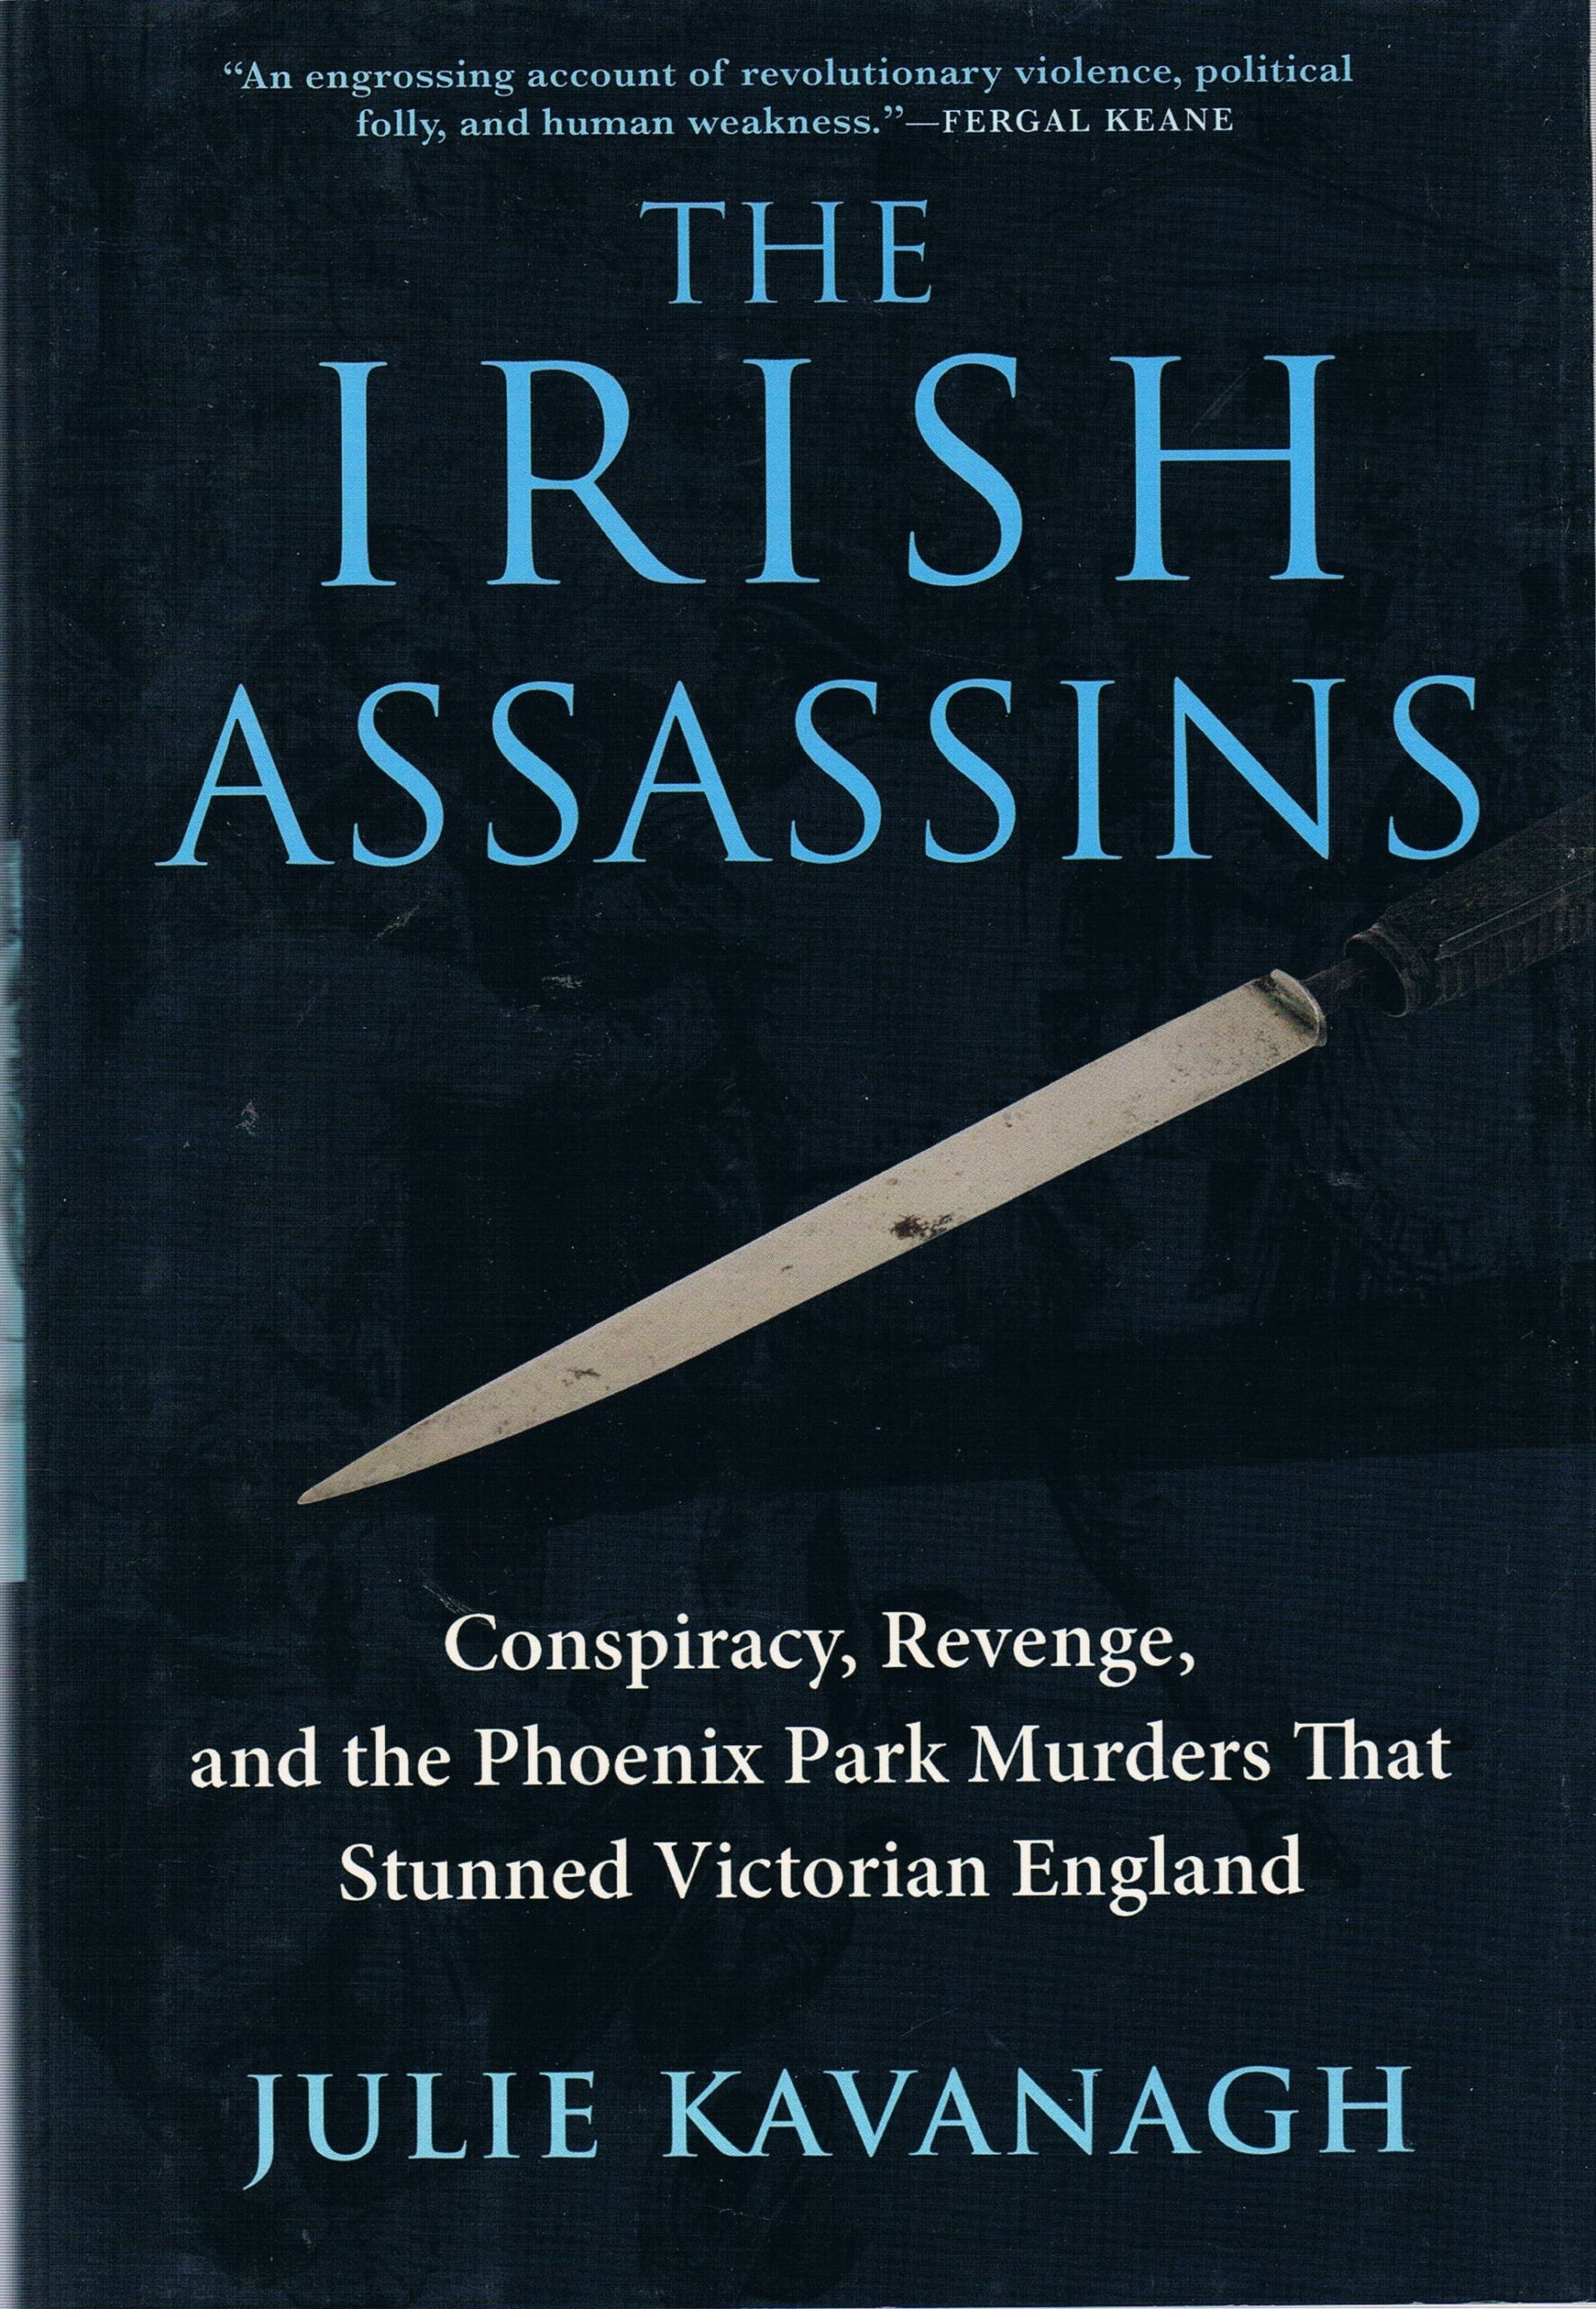 The Irish Assassins : Conspiracy, Revenge and the Phoenix Park Murders That Stunned Victorian England by Julie Kavanagh